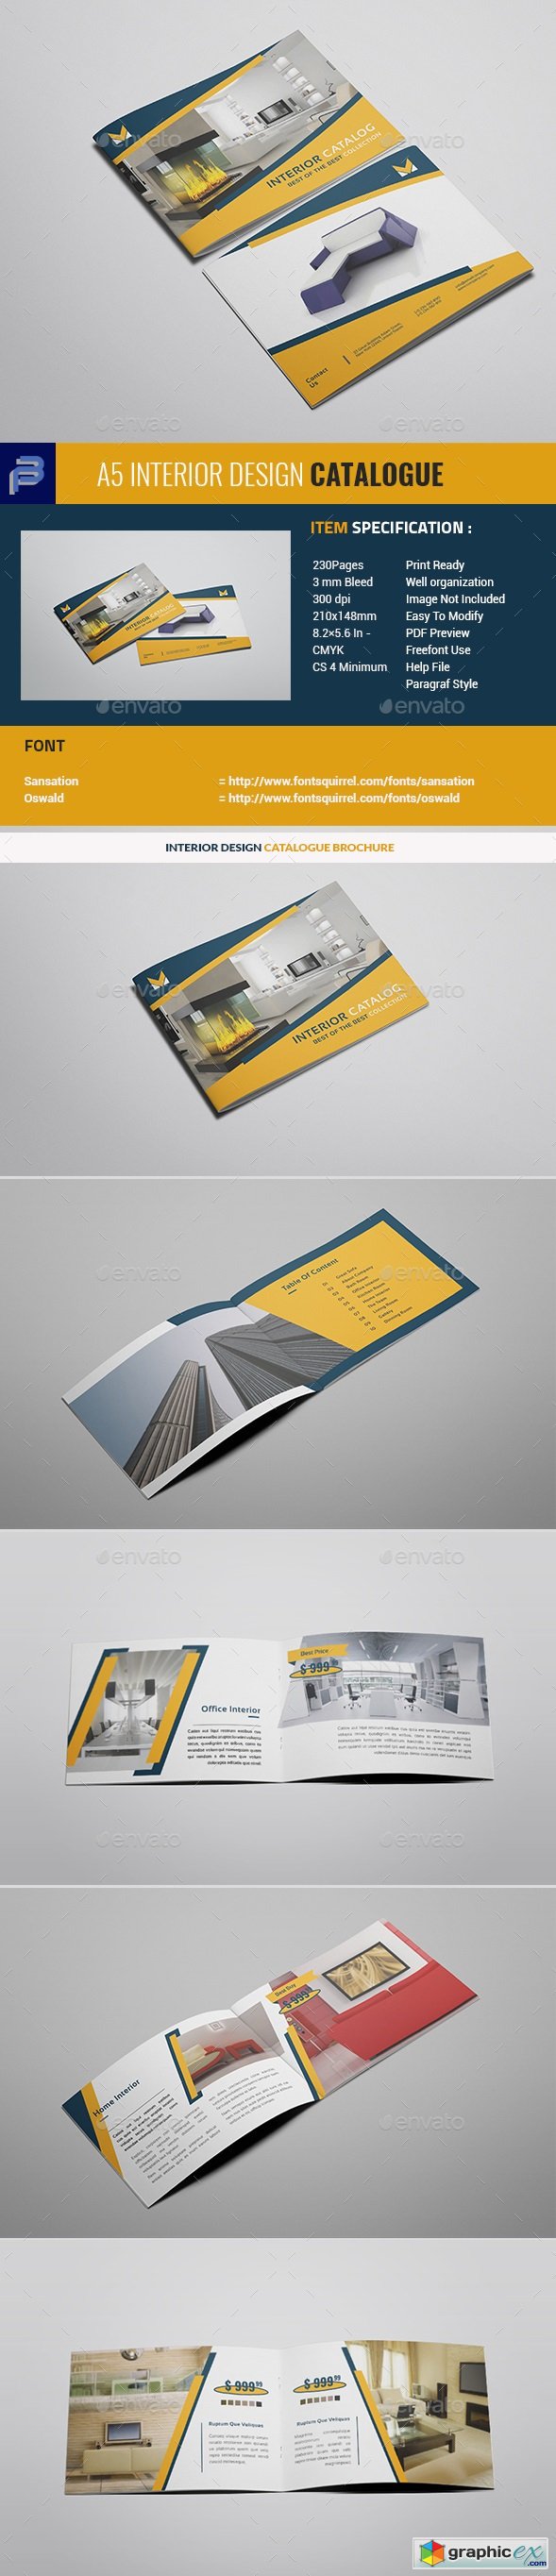 A5 Interior Design Catalogue Brochure